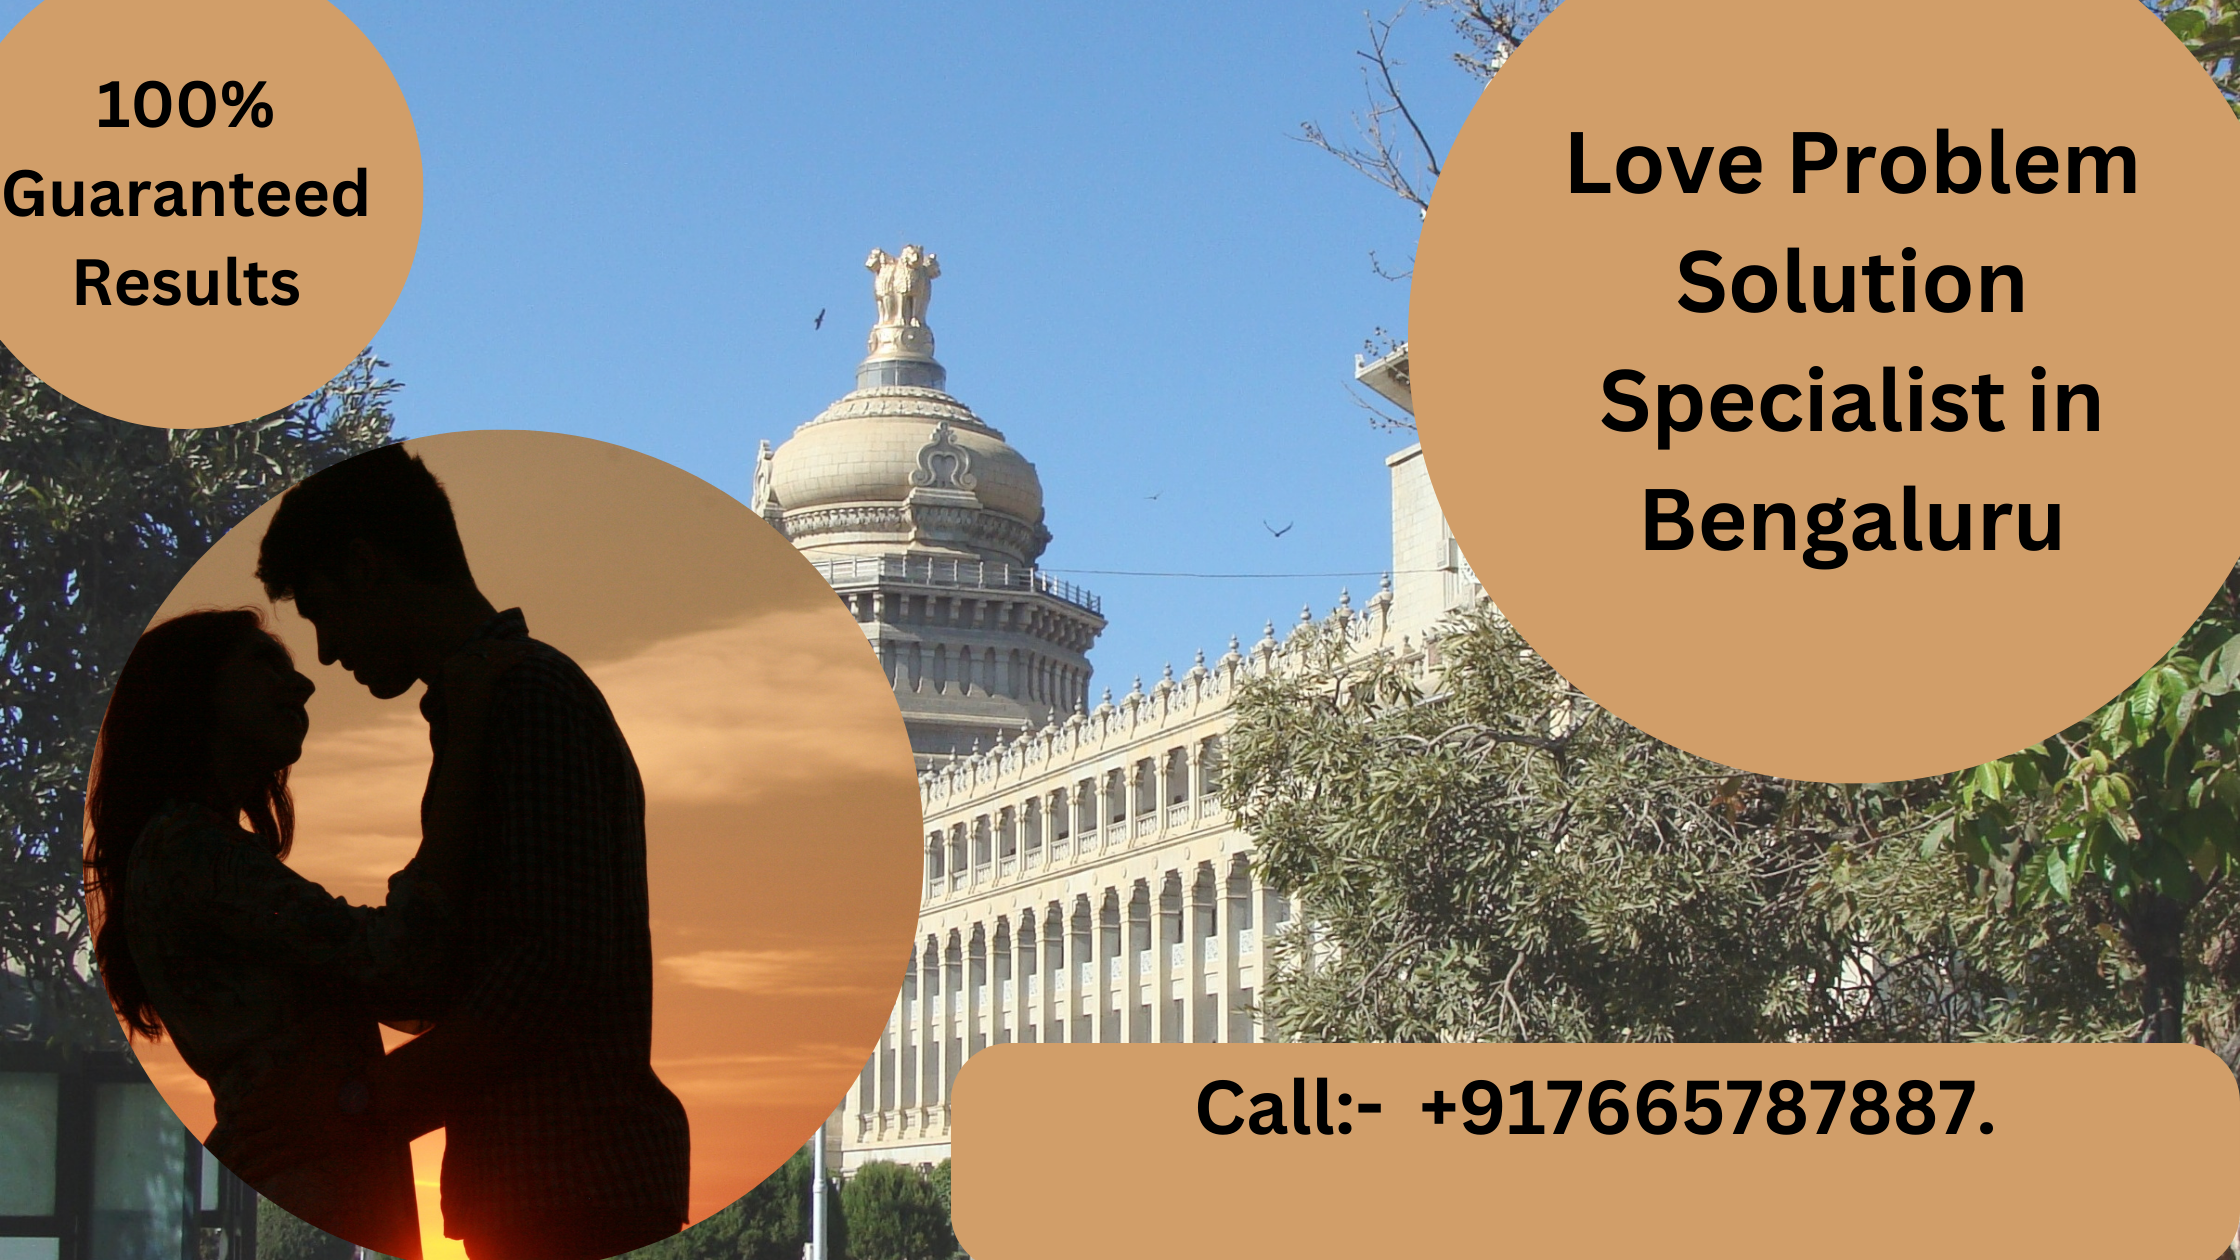 Love-Problem-Solution-Specialist-in-Bengaluru